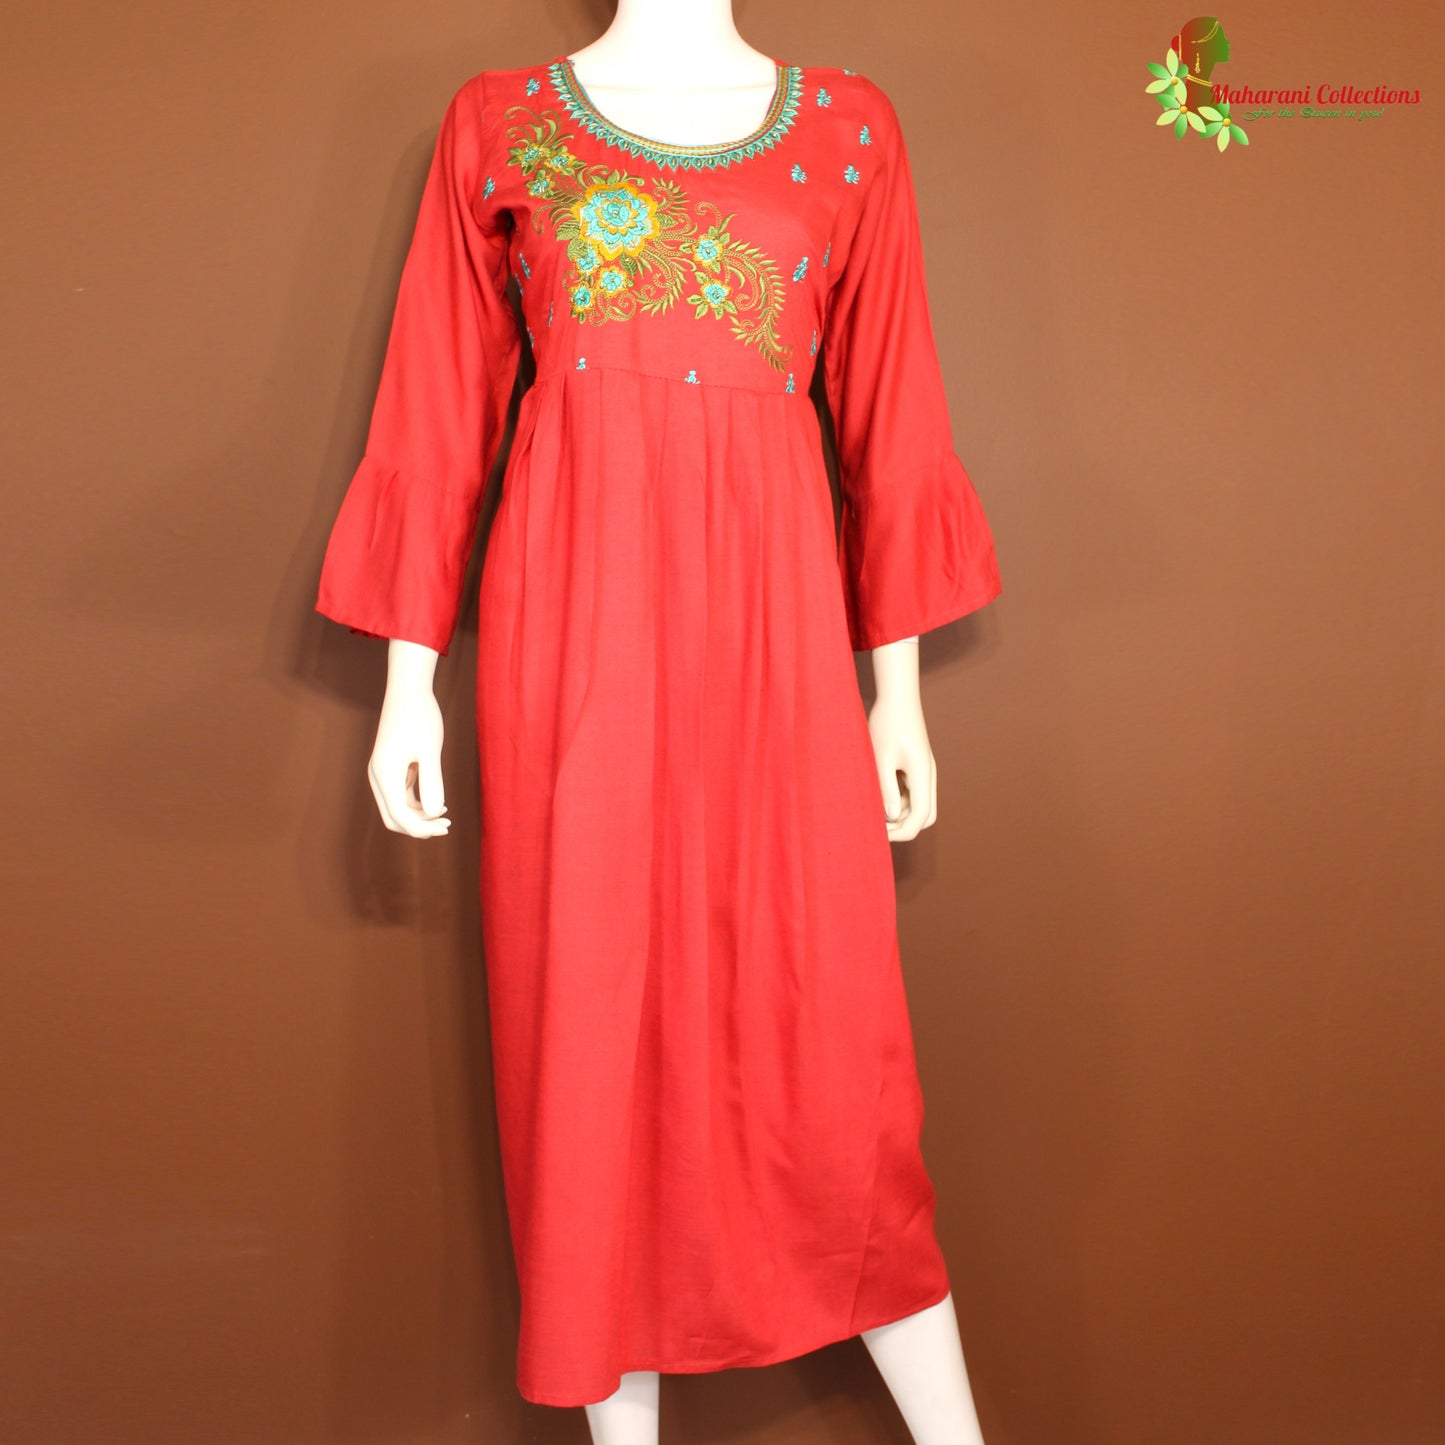 Maharani's Long Dress - Soft Cotton - Red (M)